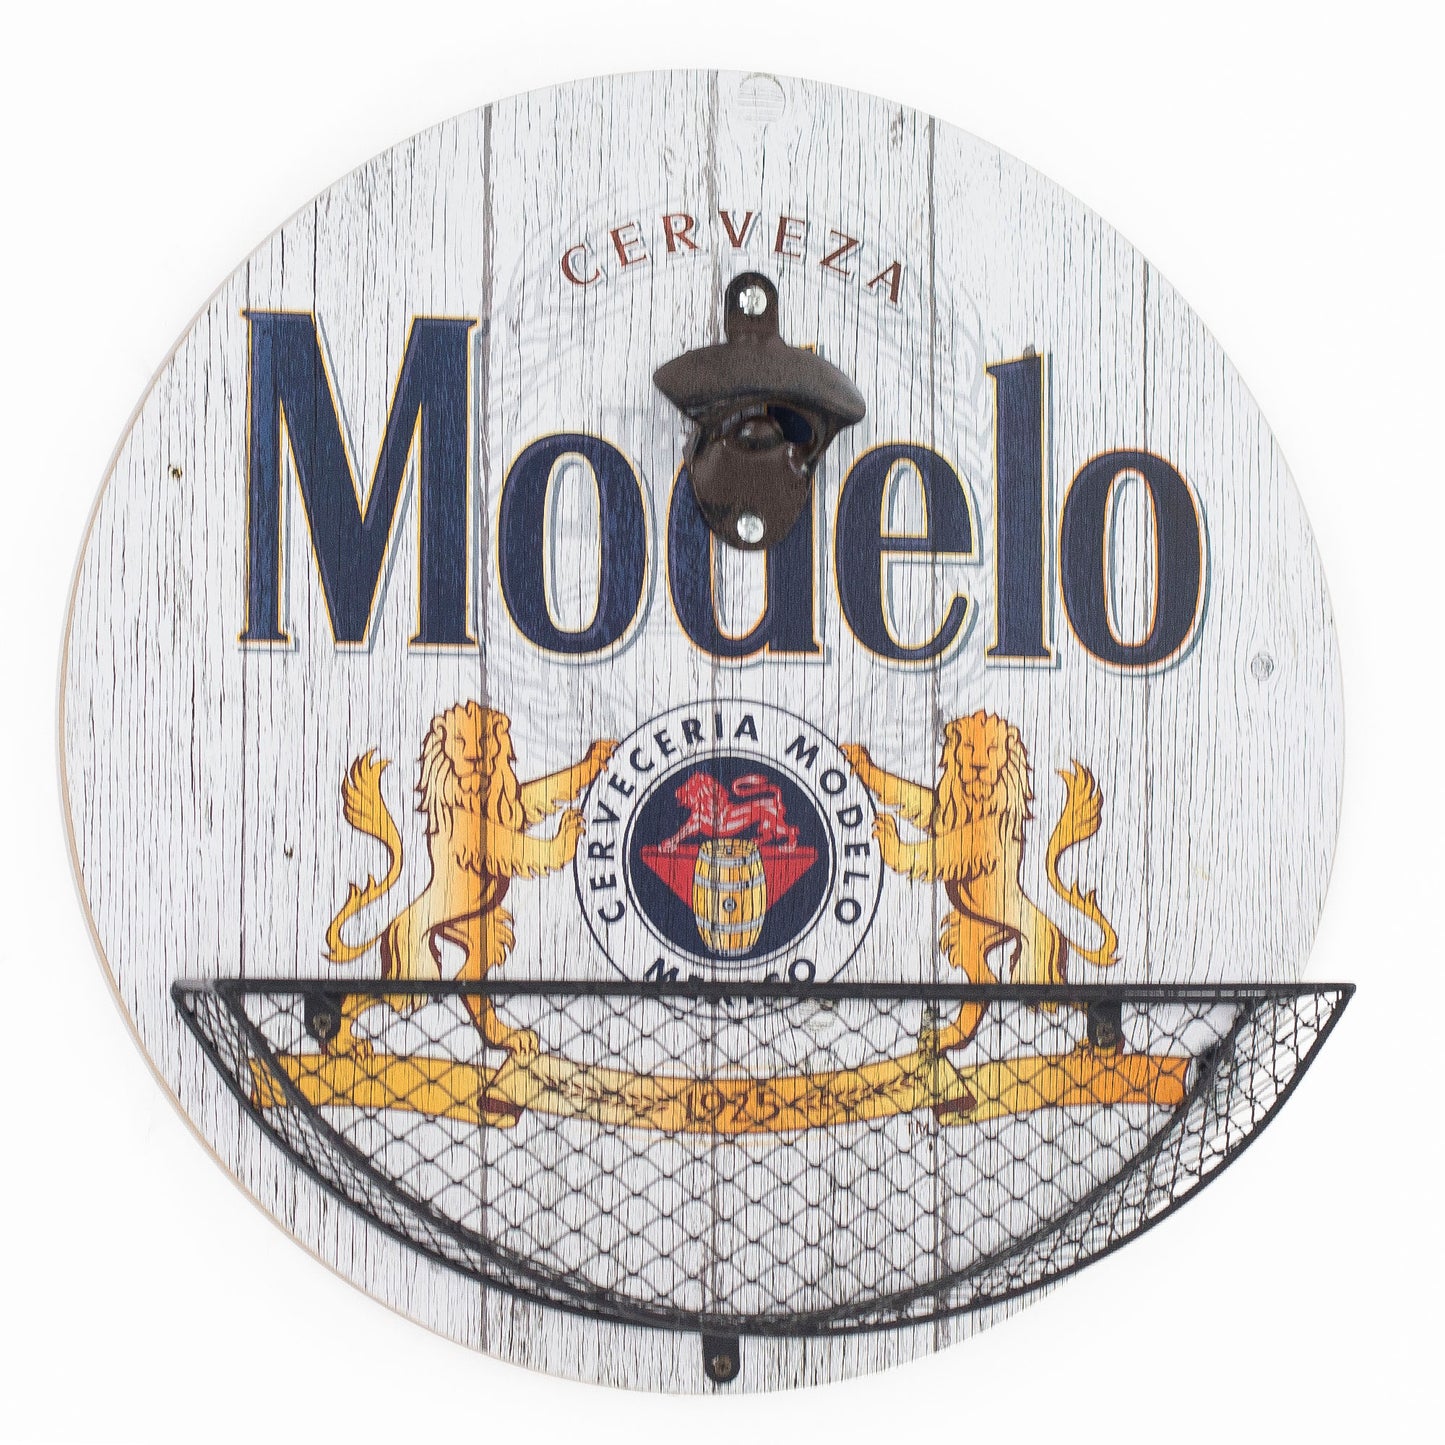 Modelo Beer Bottle Opener & Cap Catcher Wall Decor - 14"